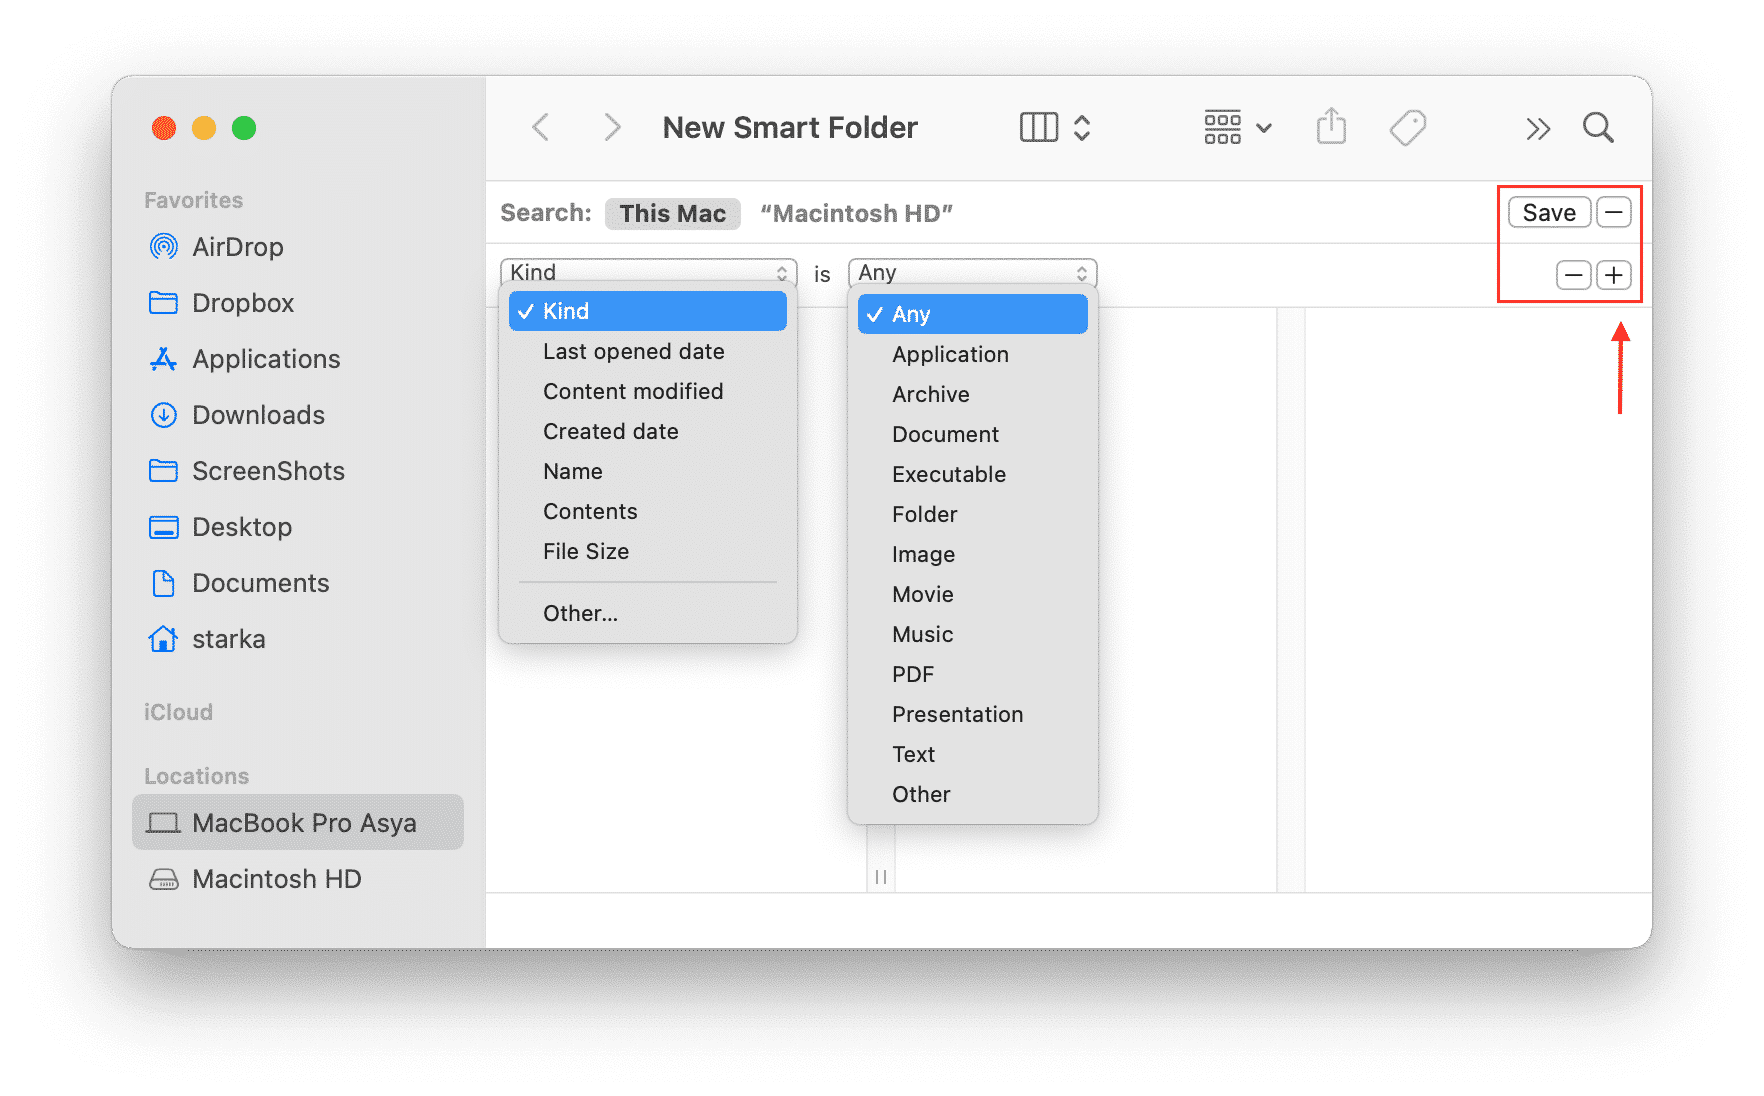 New Smart Folder options window